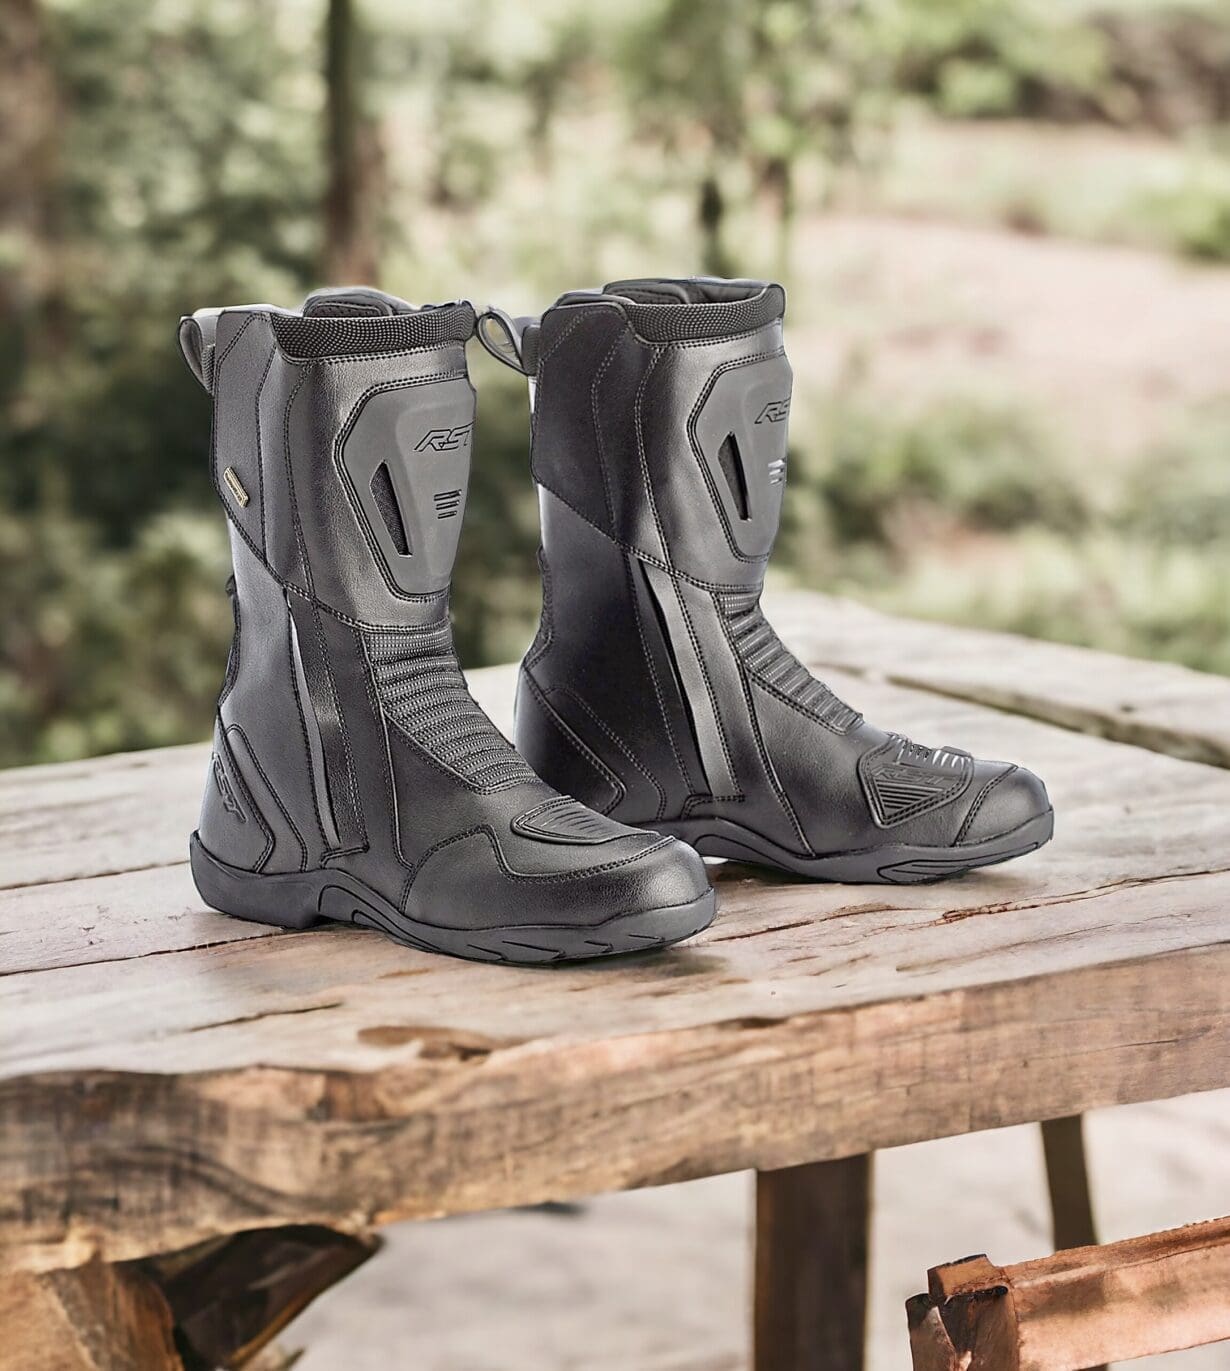 What we Wear: RST Pathfinder Waterproof Motorcycle Boots